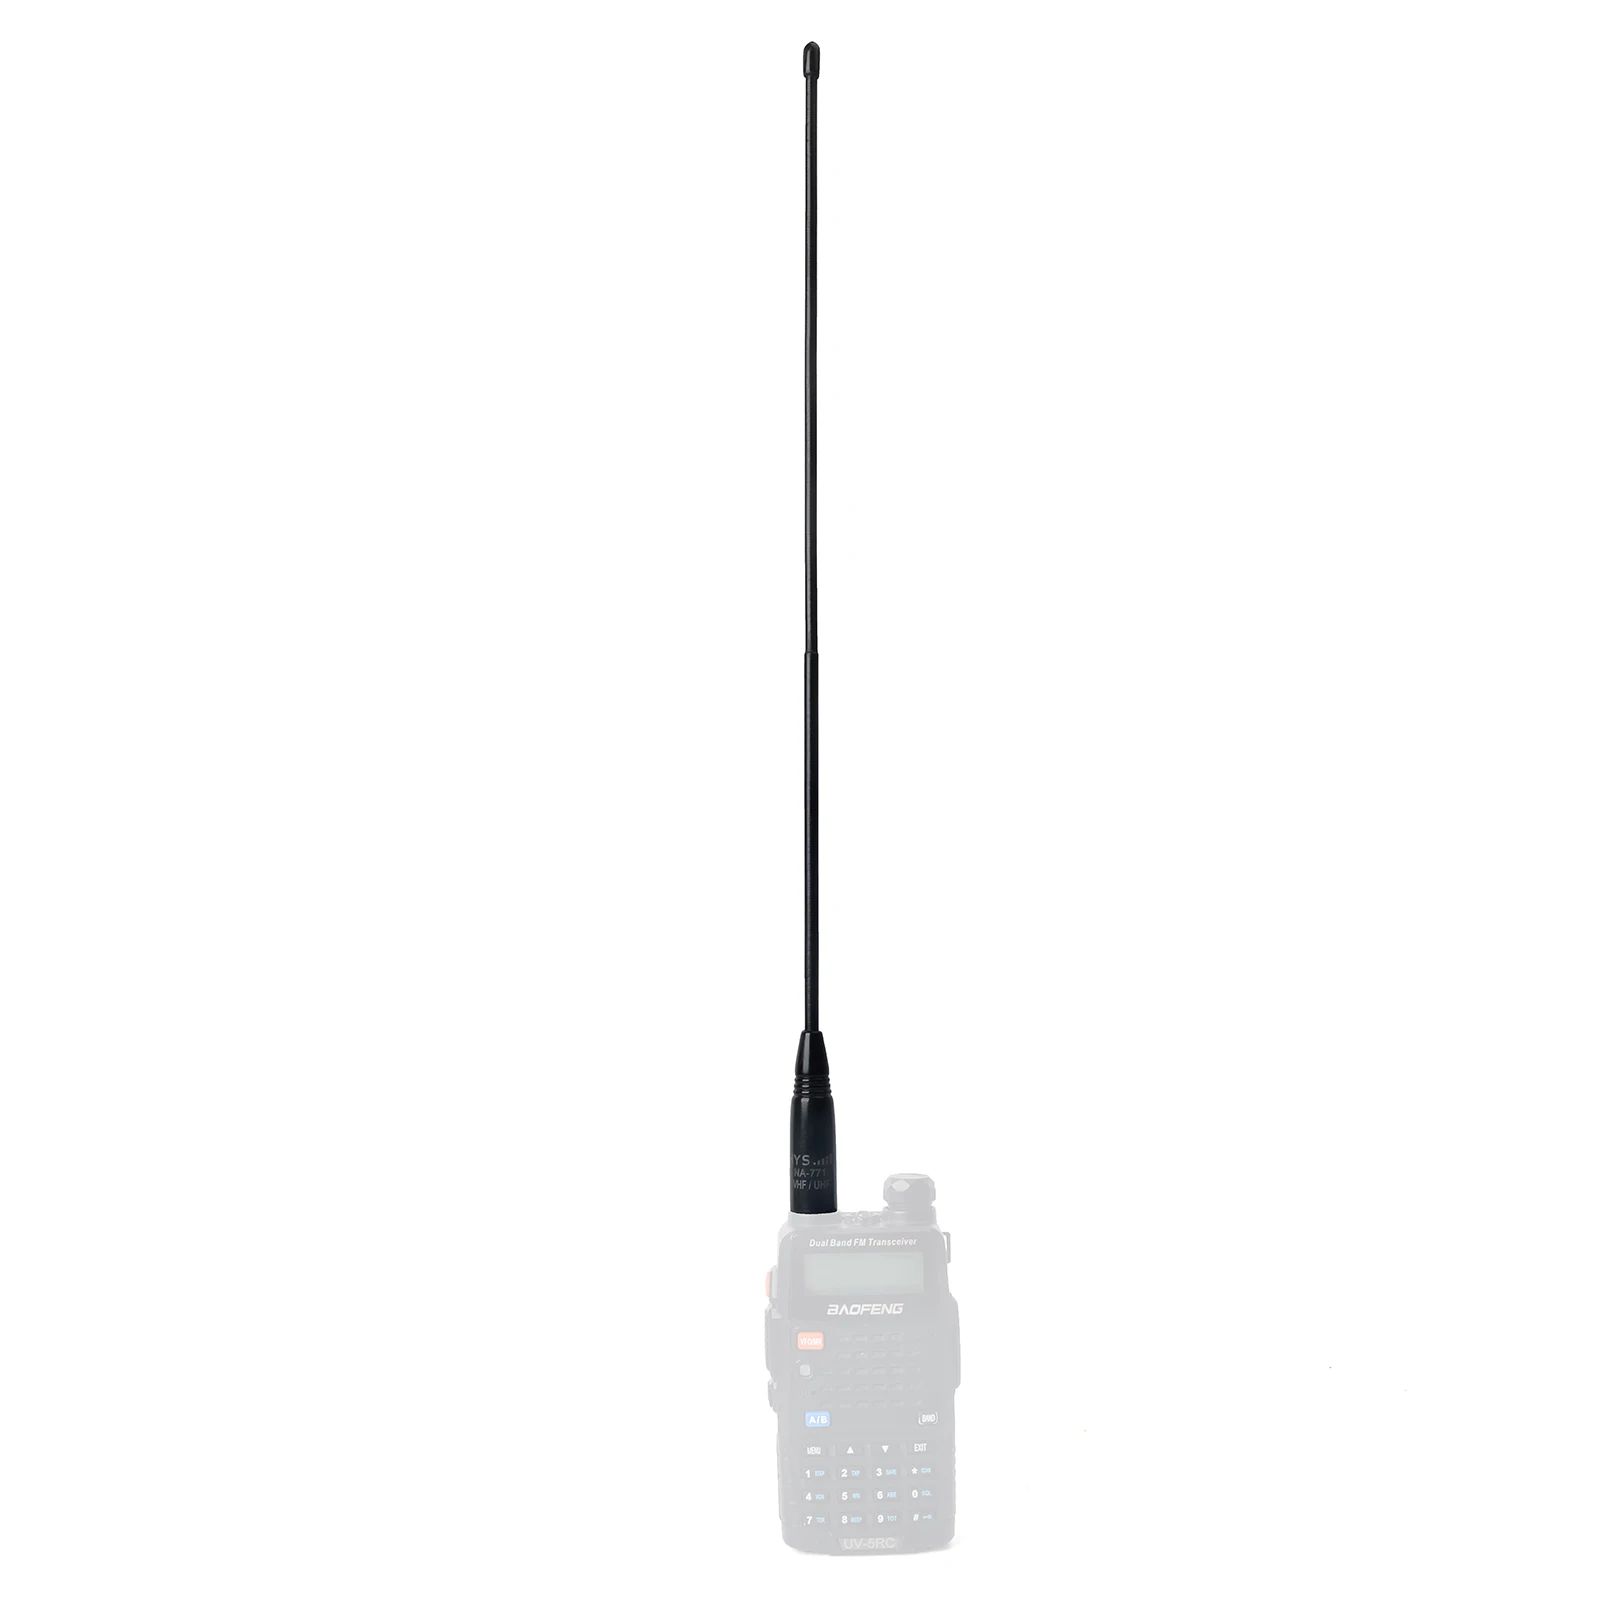 2VNT HYS NA771 Dual Band SMA Female VHF/UHF Antena Skirta Kenwood Baofeng UV5R UV82 888S Walkie Talkie